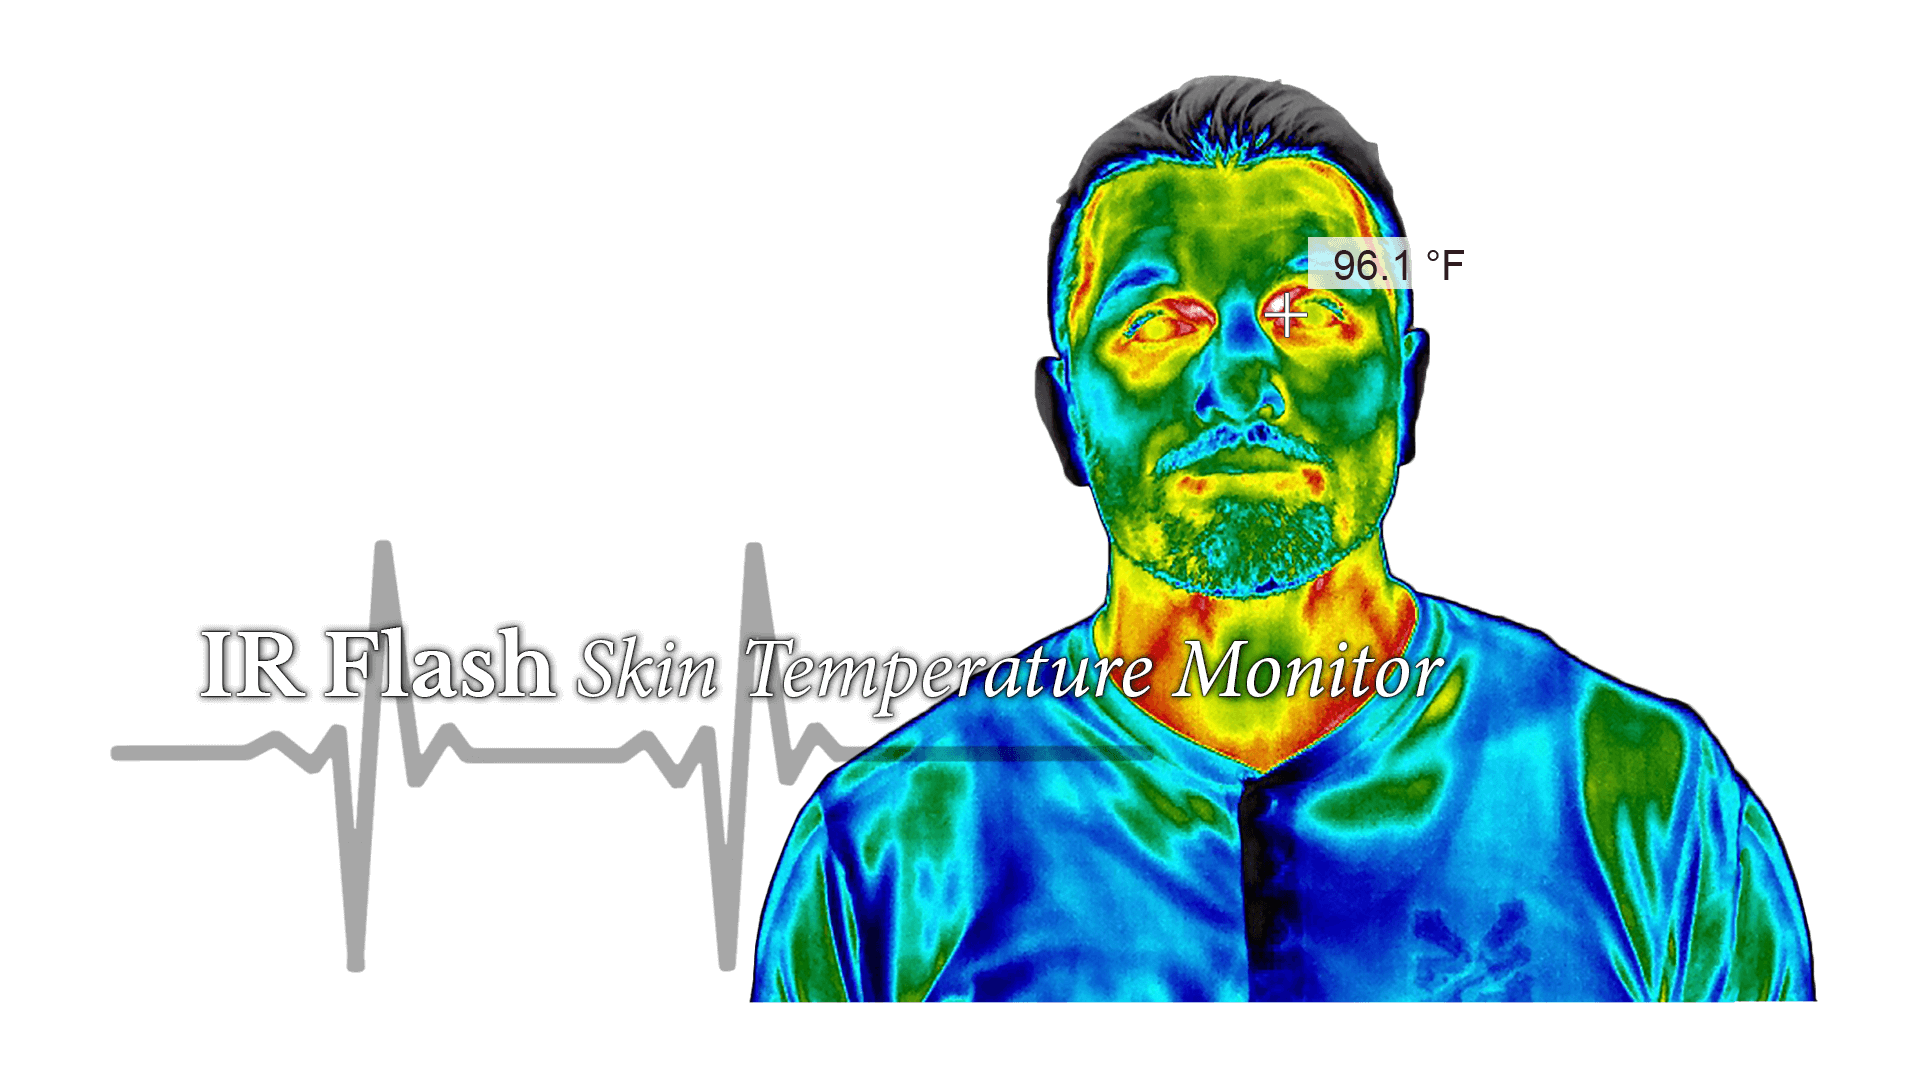 ir-flash-skin-temperature-monitor-splash-1920x1080-1-1